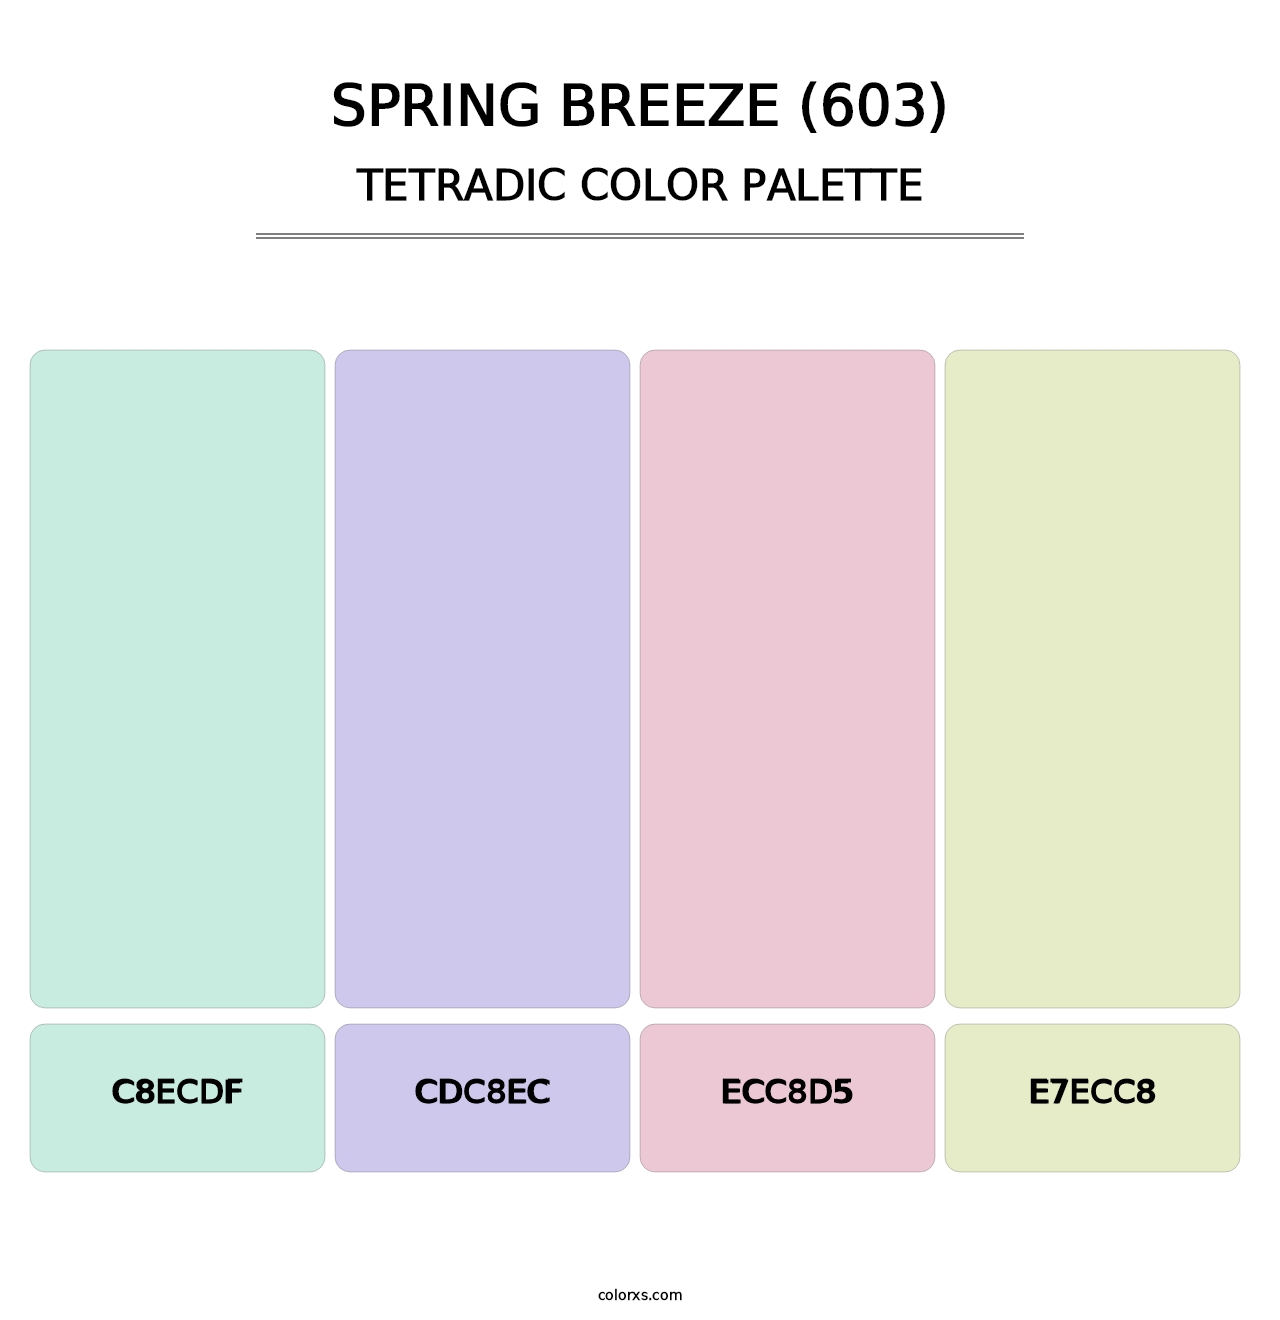 Spring Breeze (603) - Tetradic Color Palette